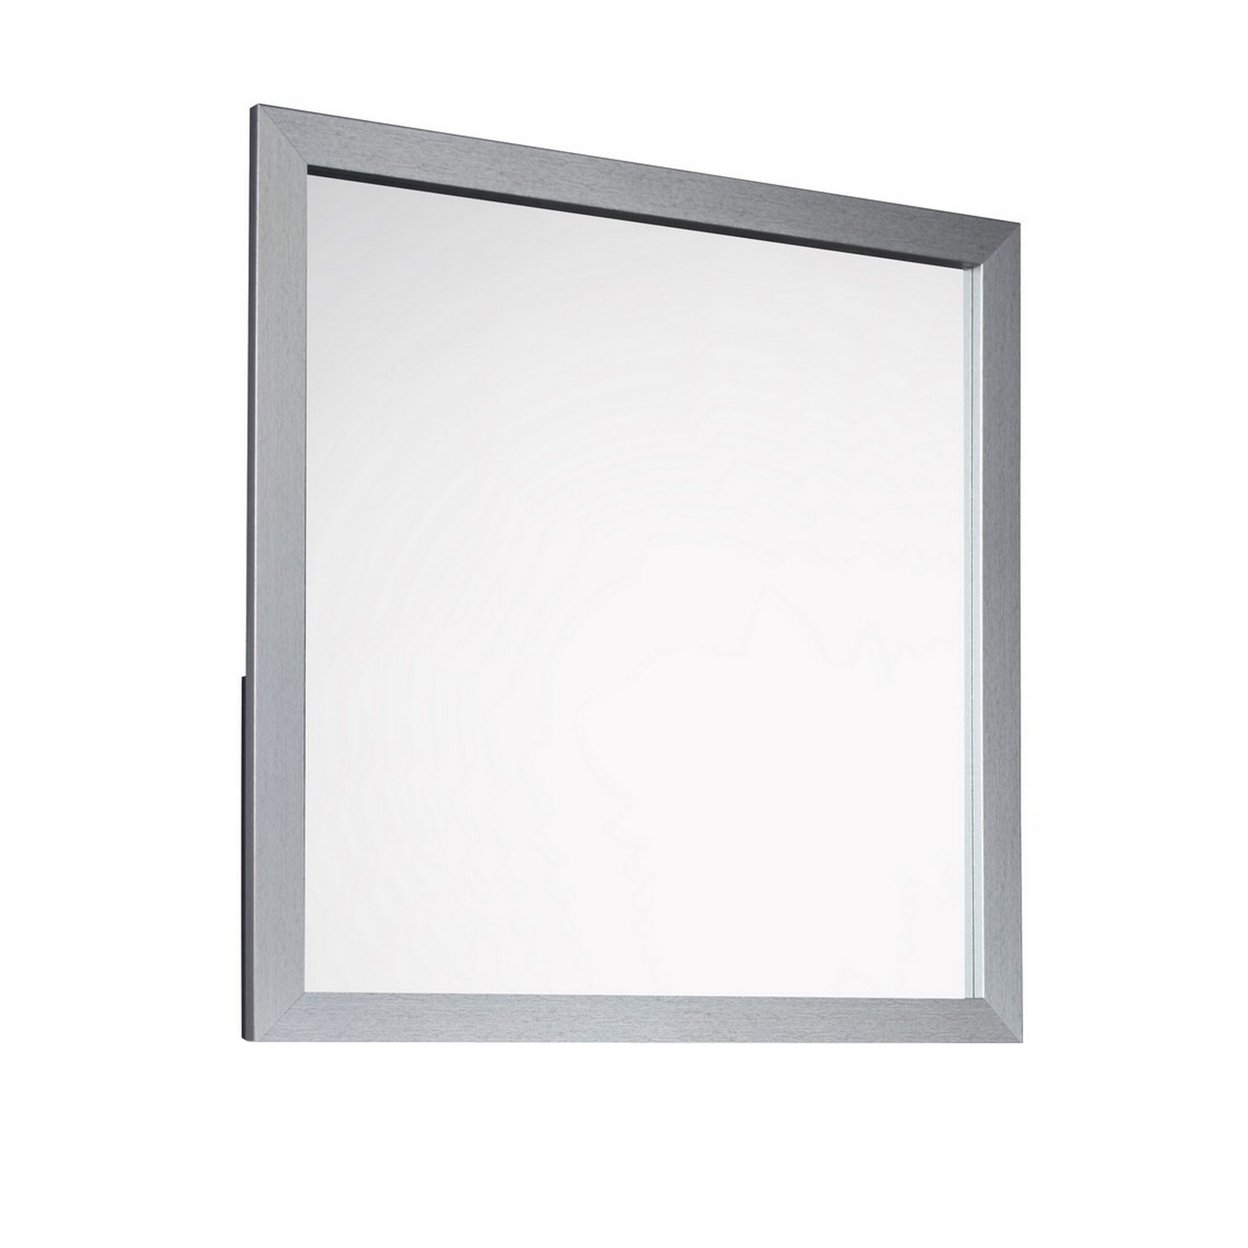 Moko 40 X 40 Dresser Mirror, Square, Modern Style, Gray Finished Frame -Saltoro Sherpi